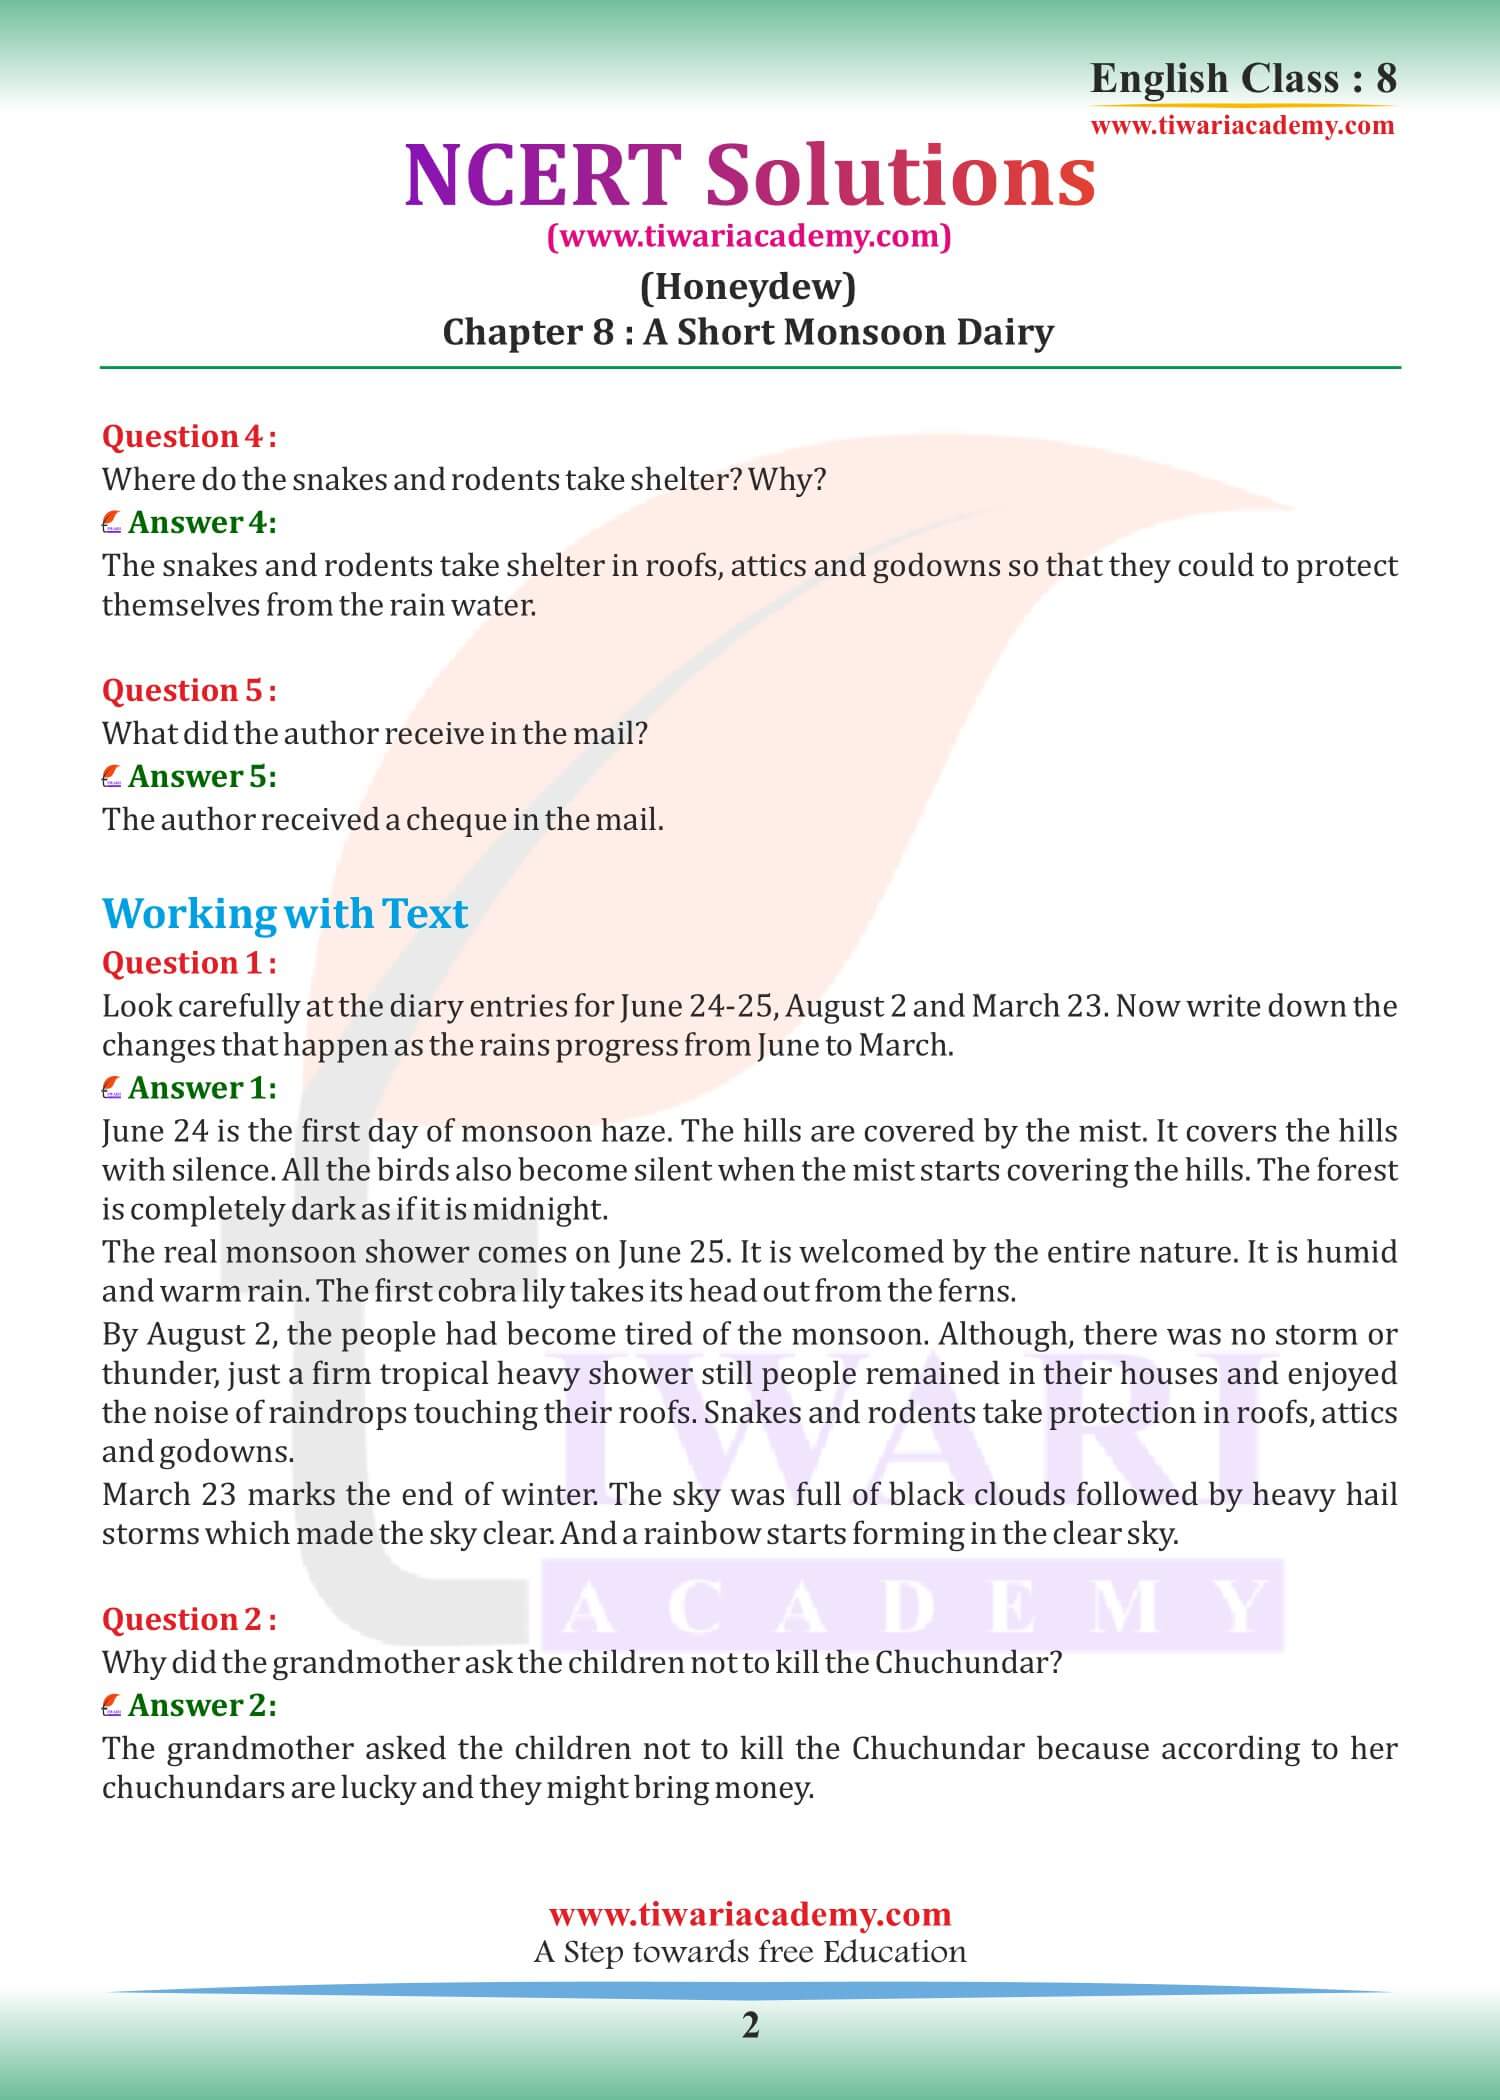 Class 8 English Honeydew Chapter 8 A Short Monsoon Diary